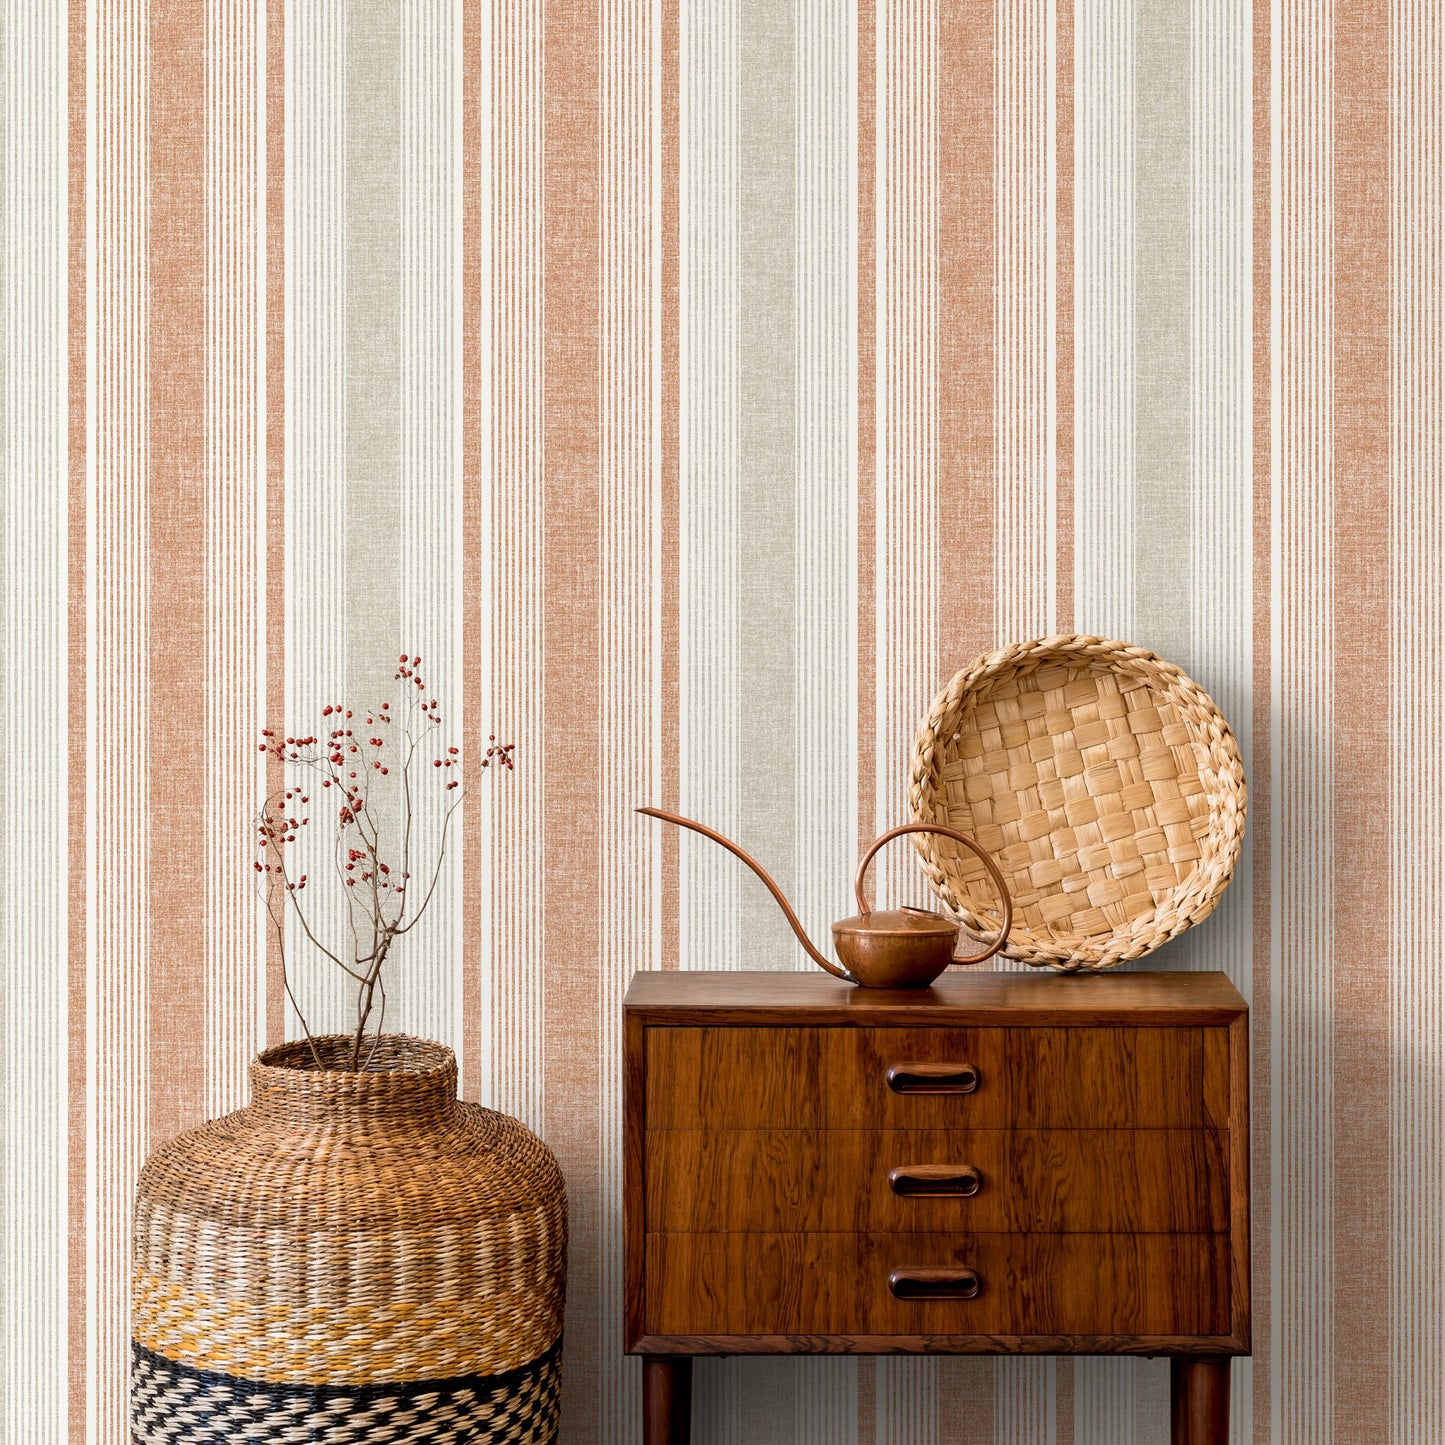 Textured Striped Wallpaper Orange and Grey Wallpaper Peel and Stick and Traditional Wallpaper - D839